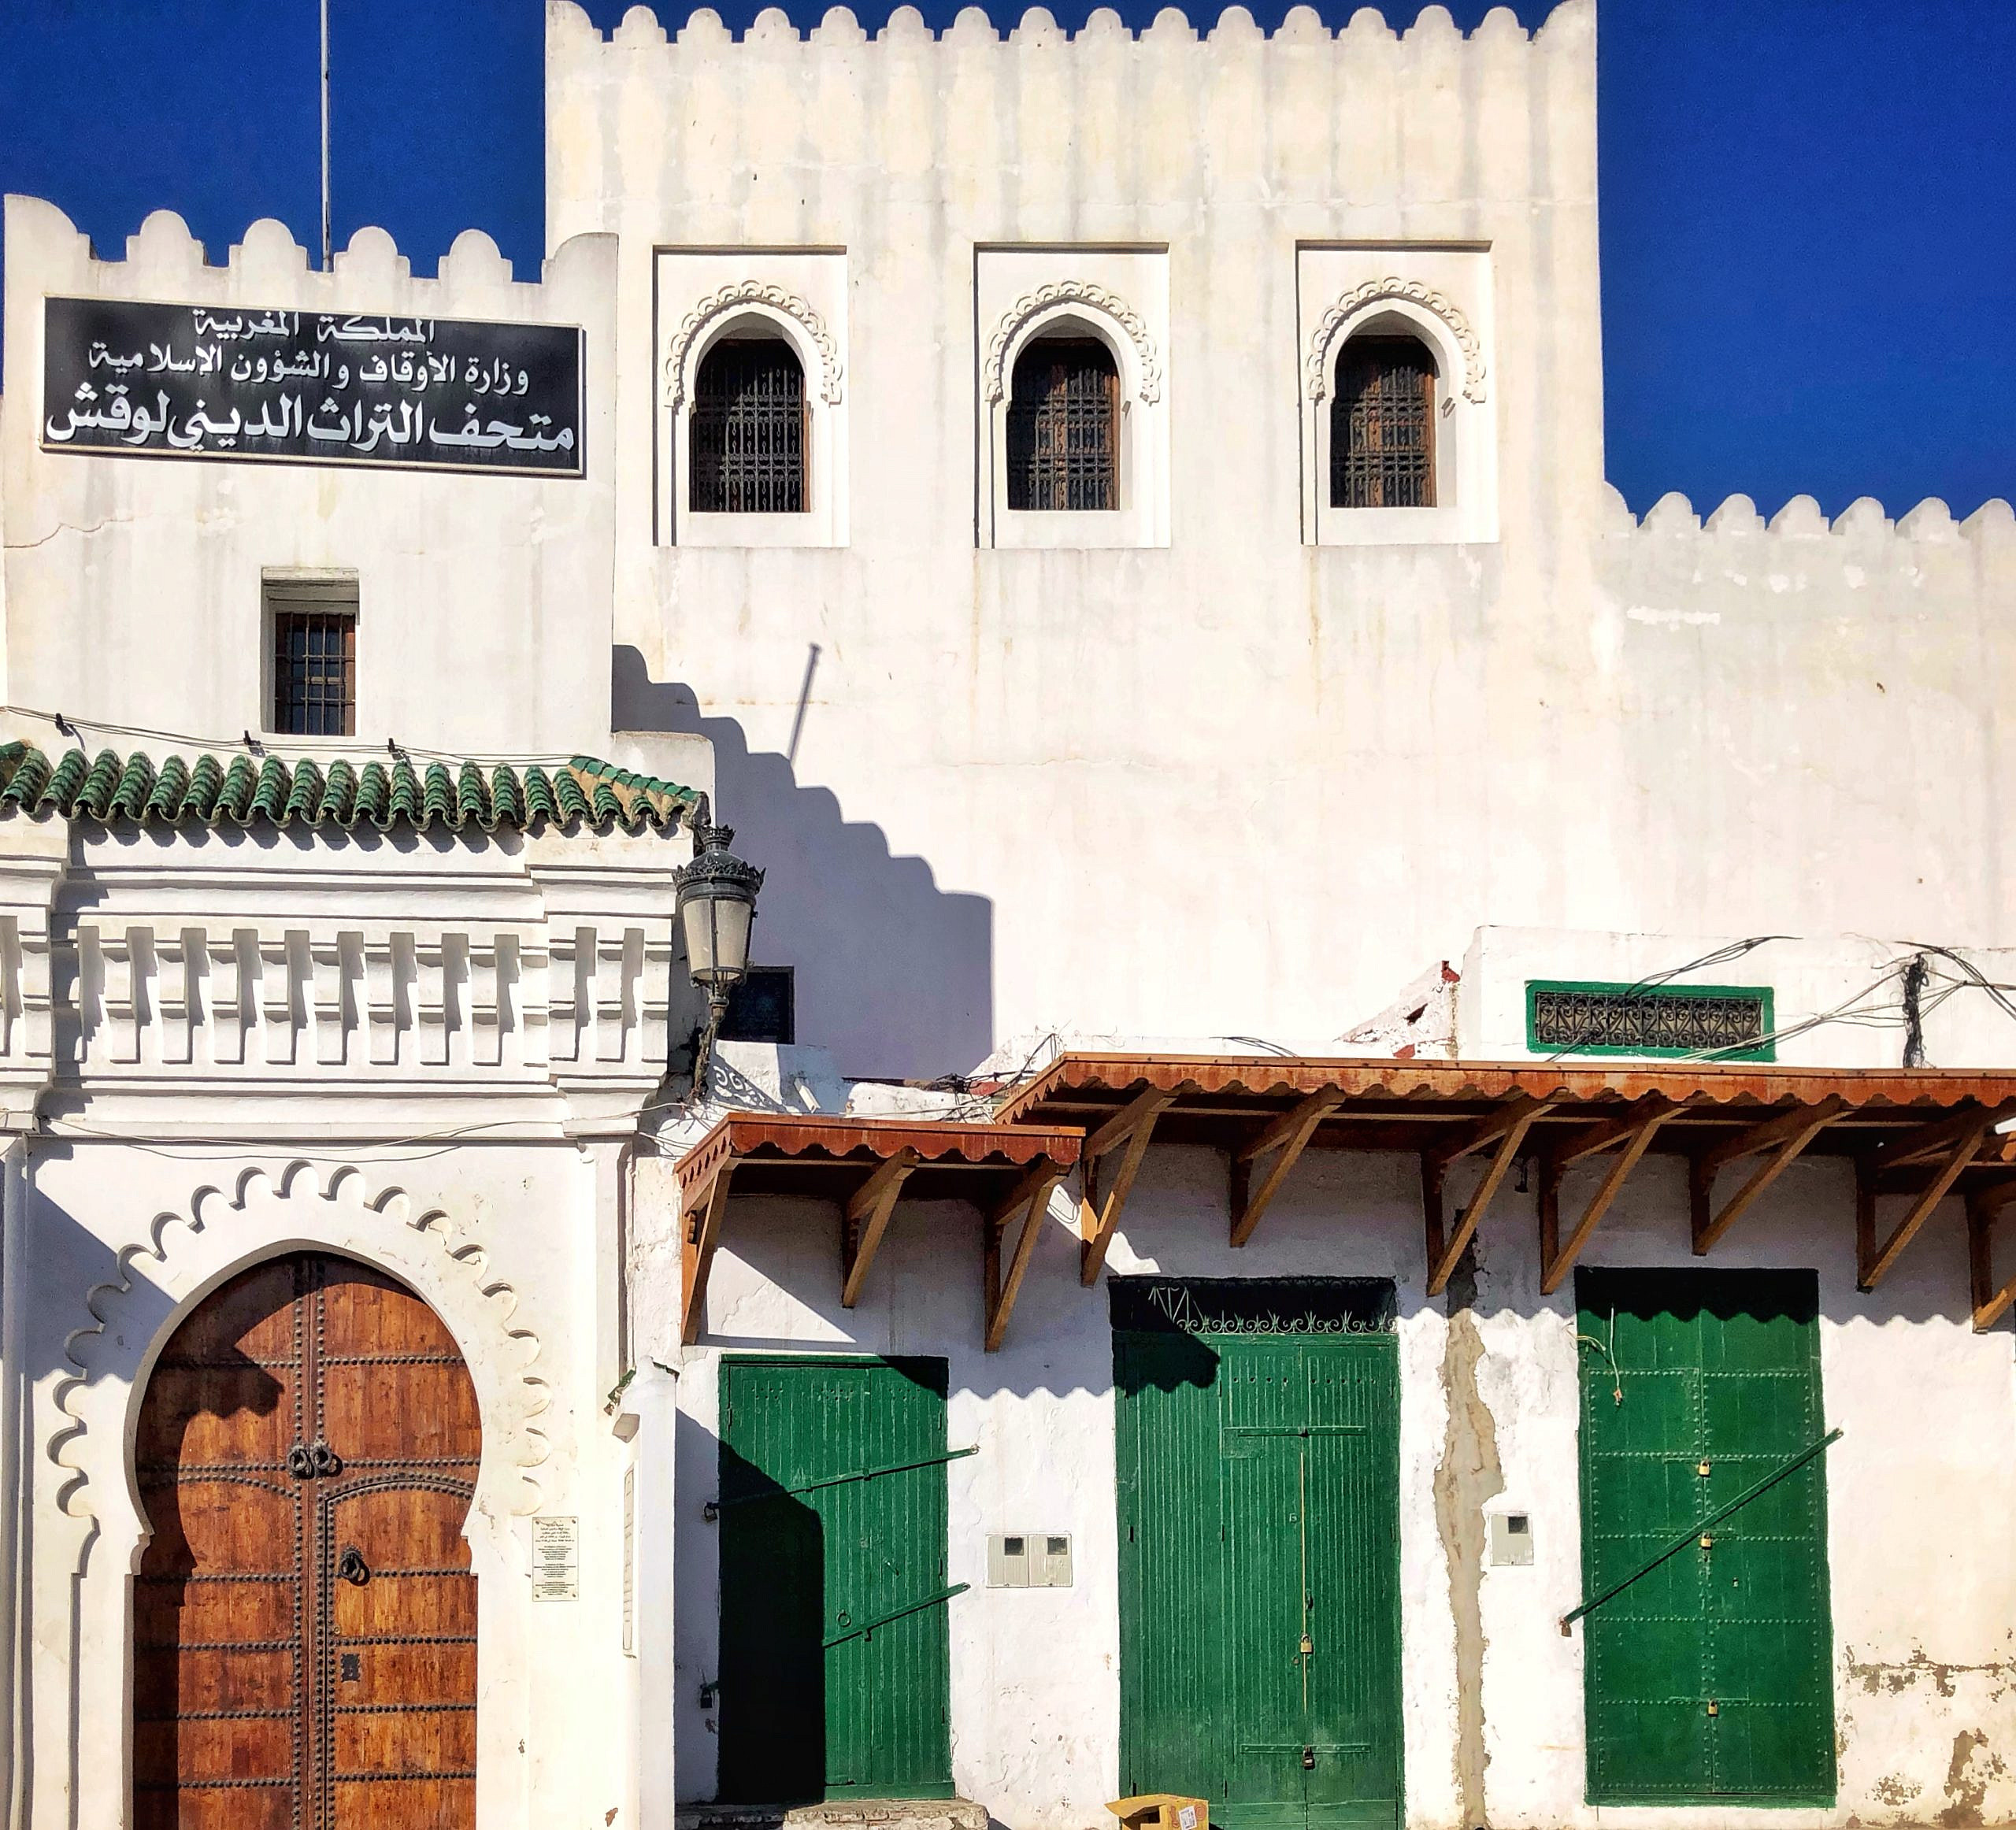 Medina of Tétouan, Morocco. November 2020. Credit: Yamen via Wikimedia Commons.